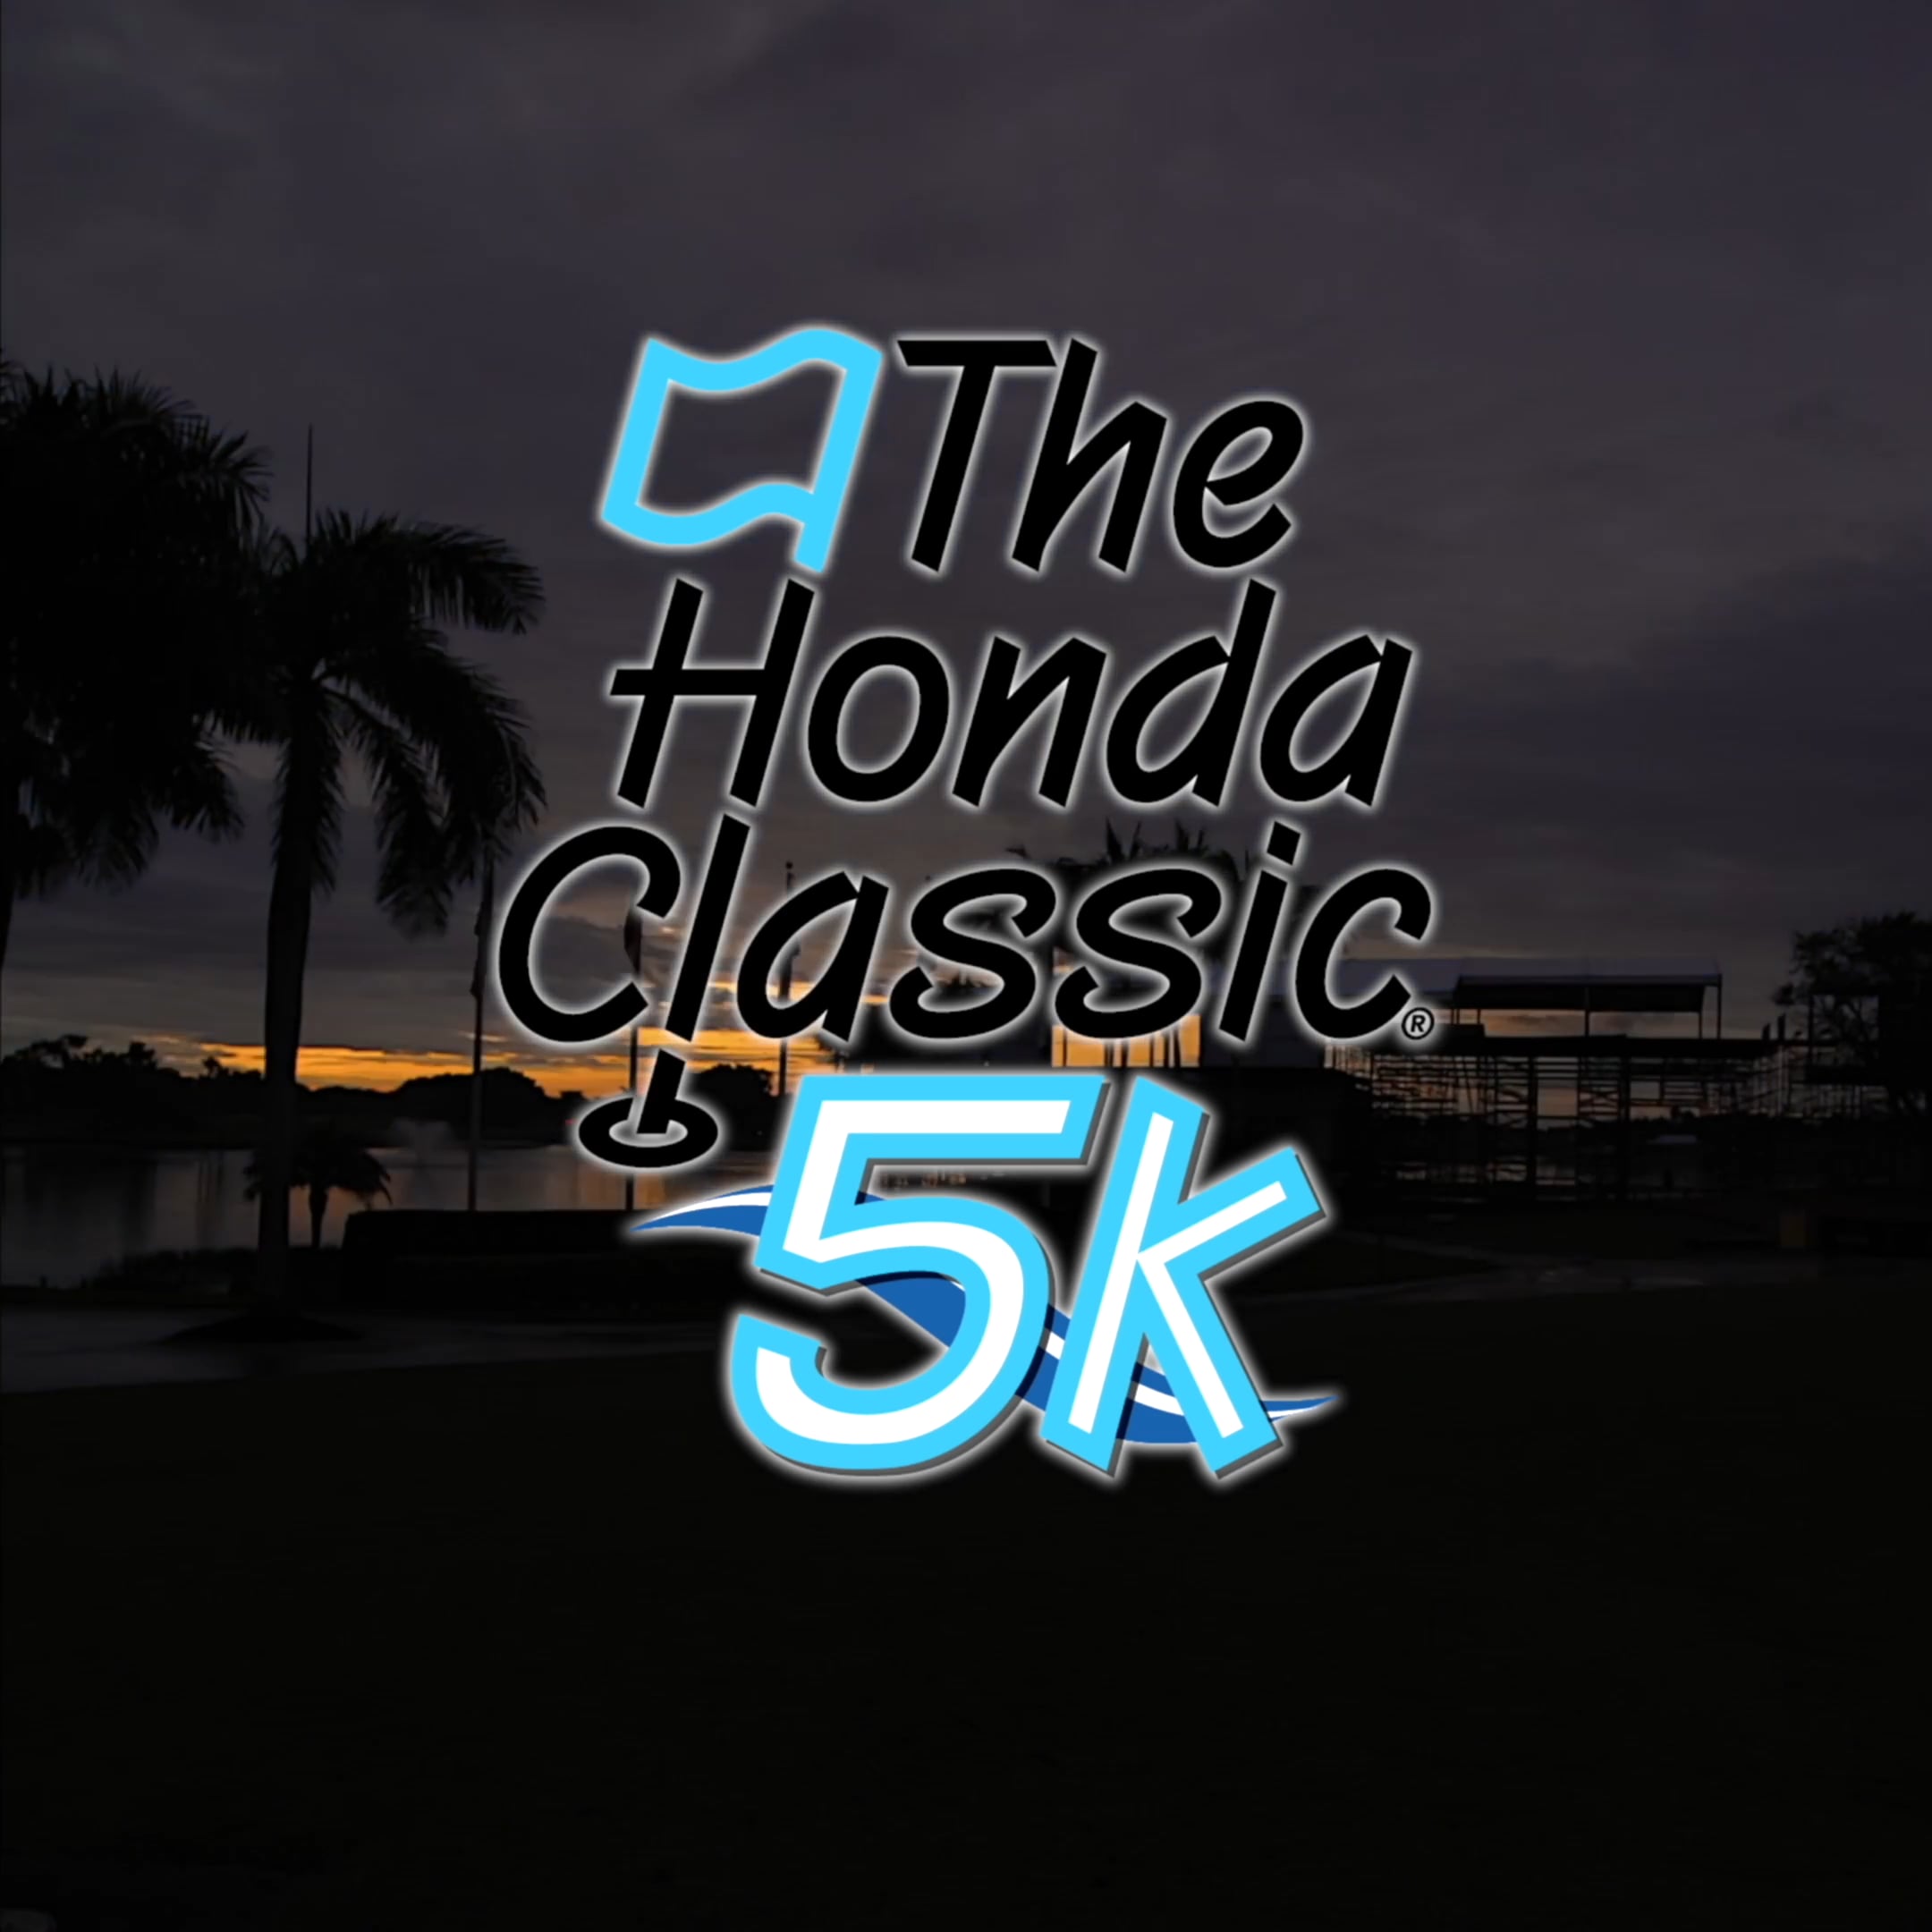 Honda Classic 5k ⎮ 2020 ⎮ Social Media Edit ⎮ 30 seconds on Vimeo